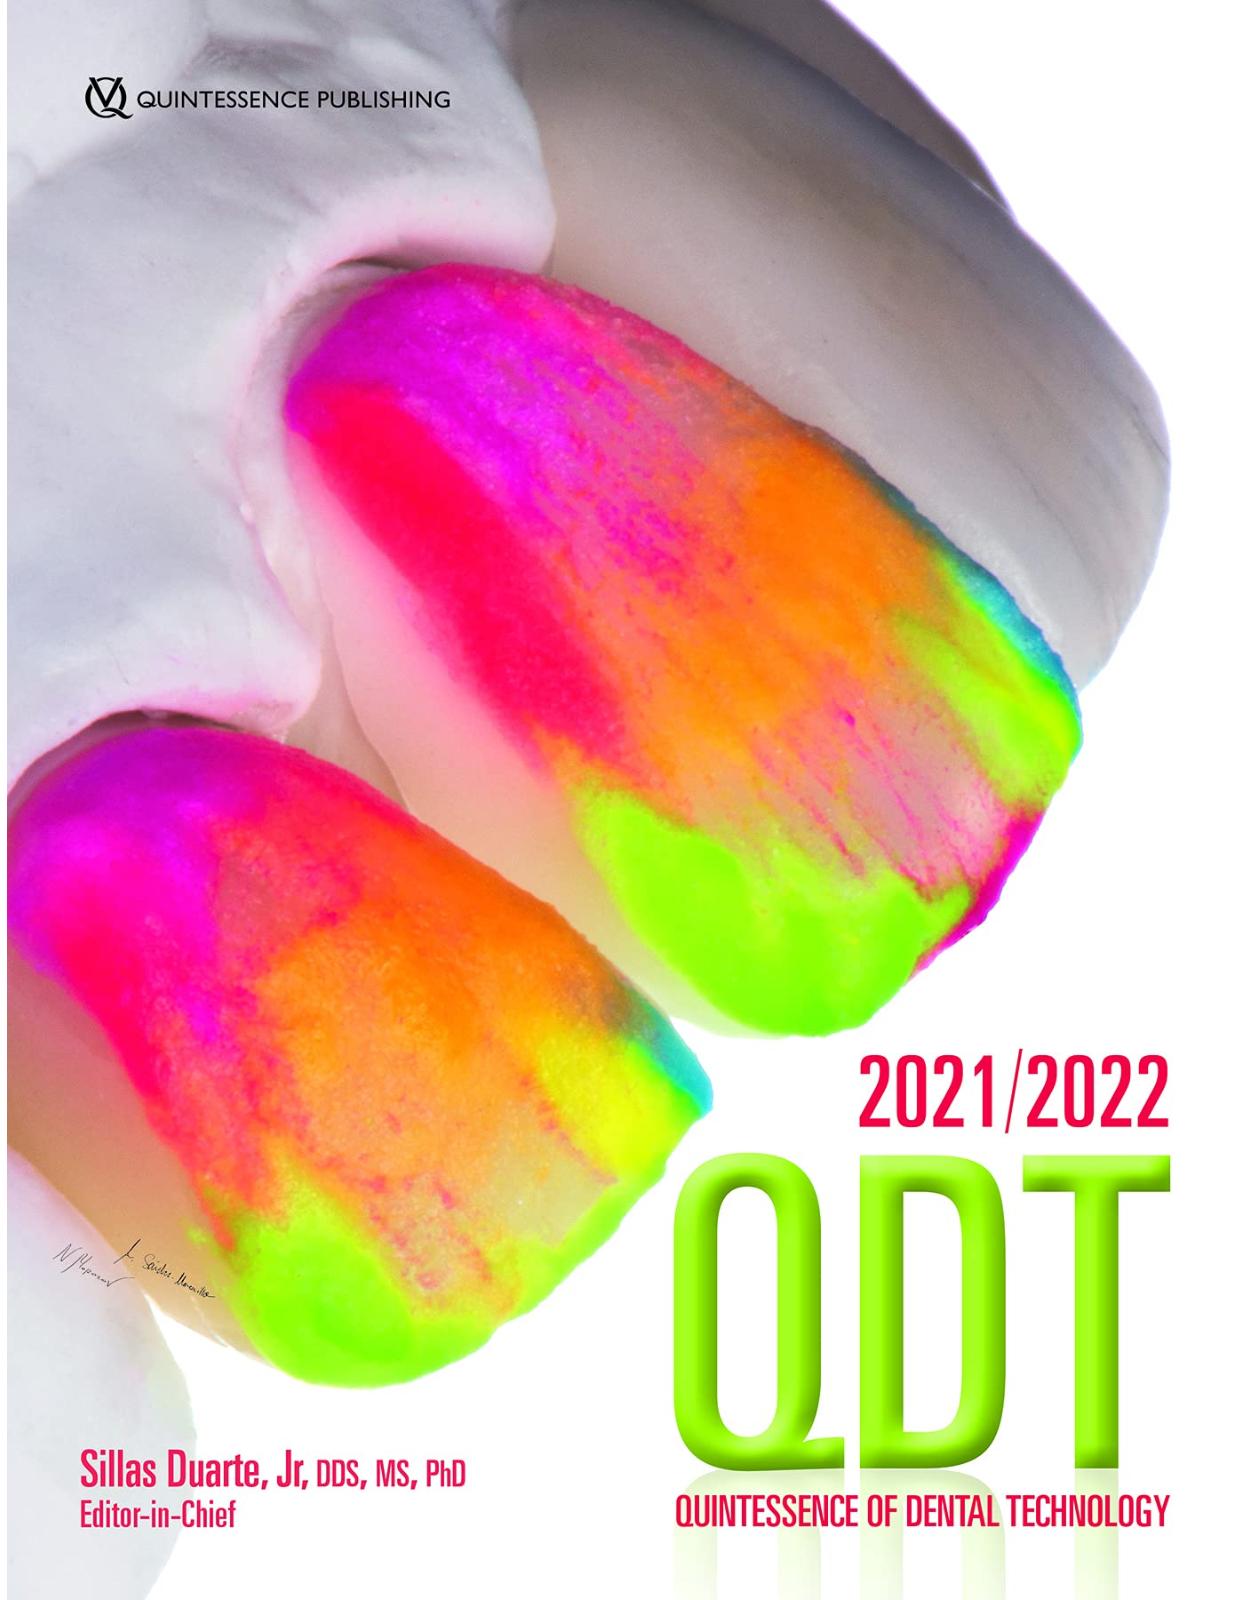 Quintessence of Dental Technology 2021/2022